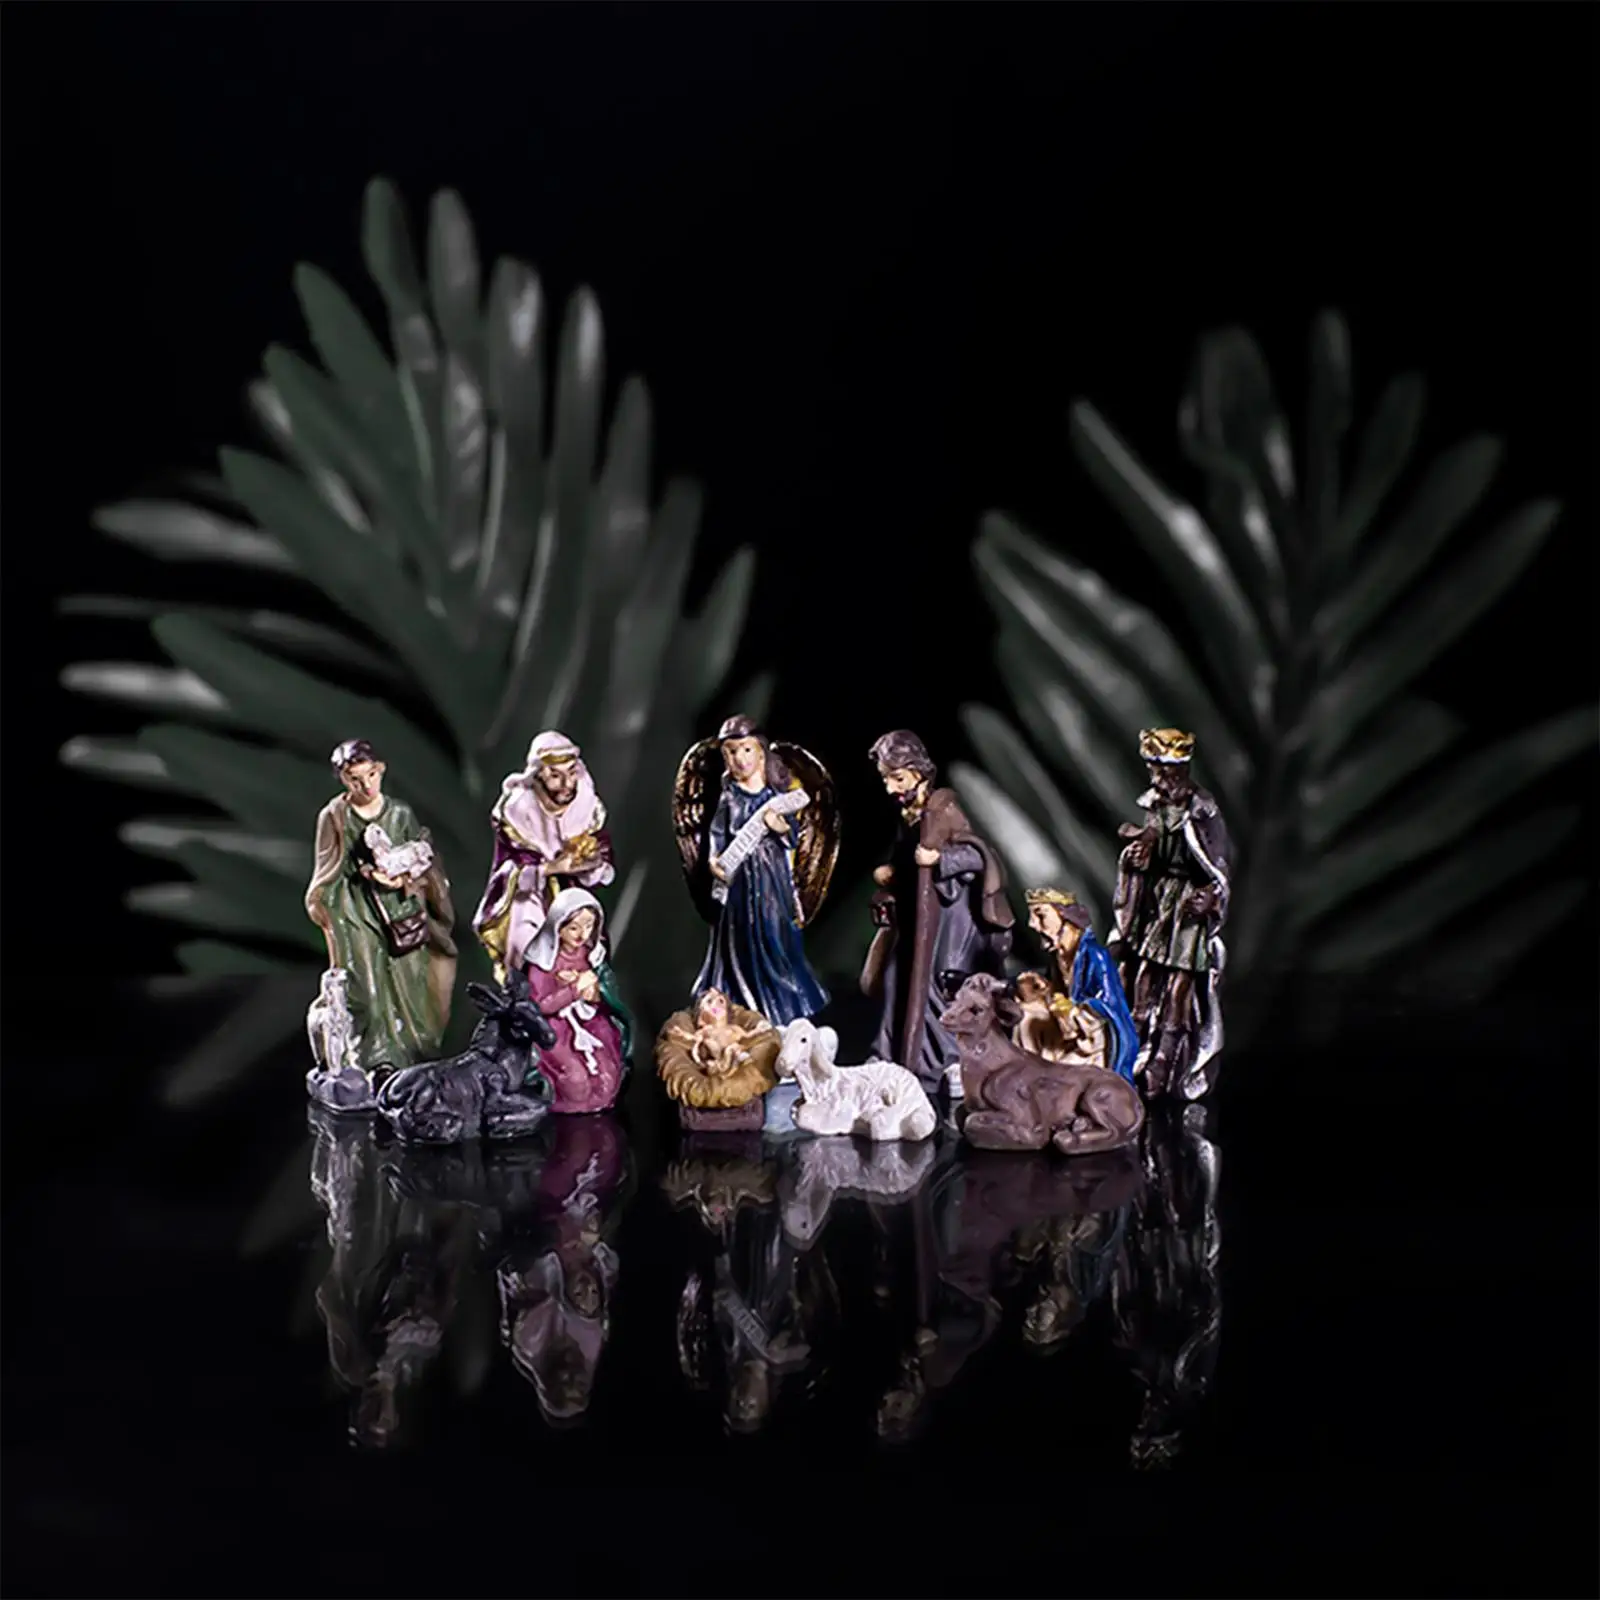 11Pcs Religious Figurines Resin Hand Painted Miniatures Sculpture Ornament